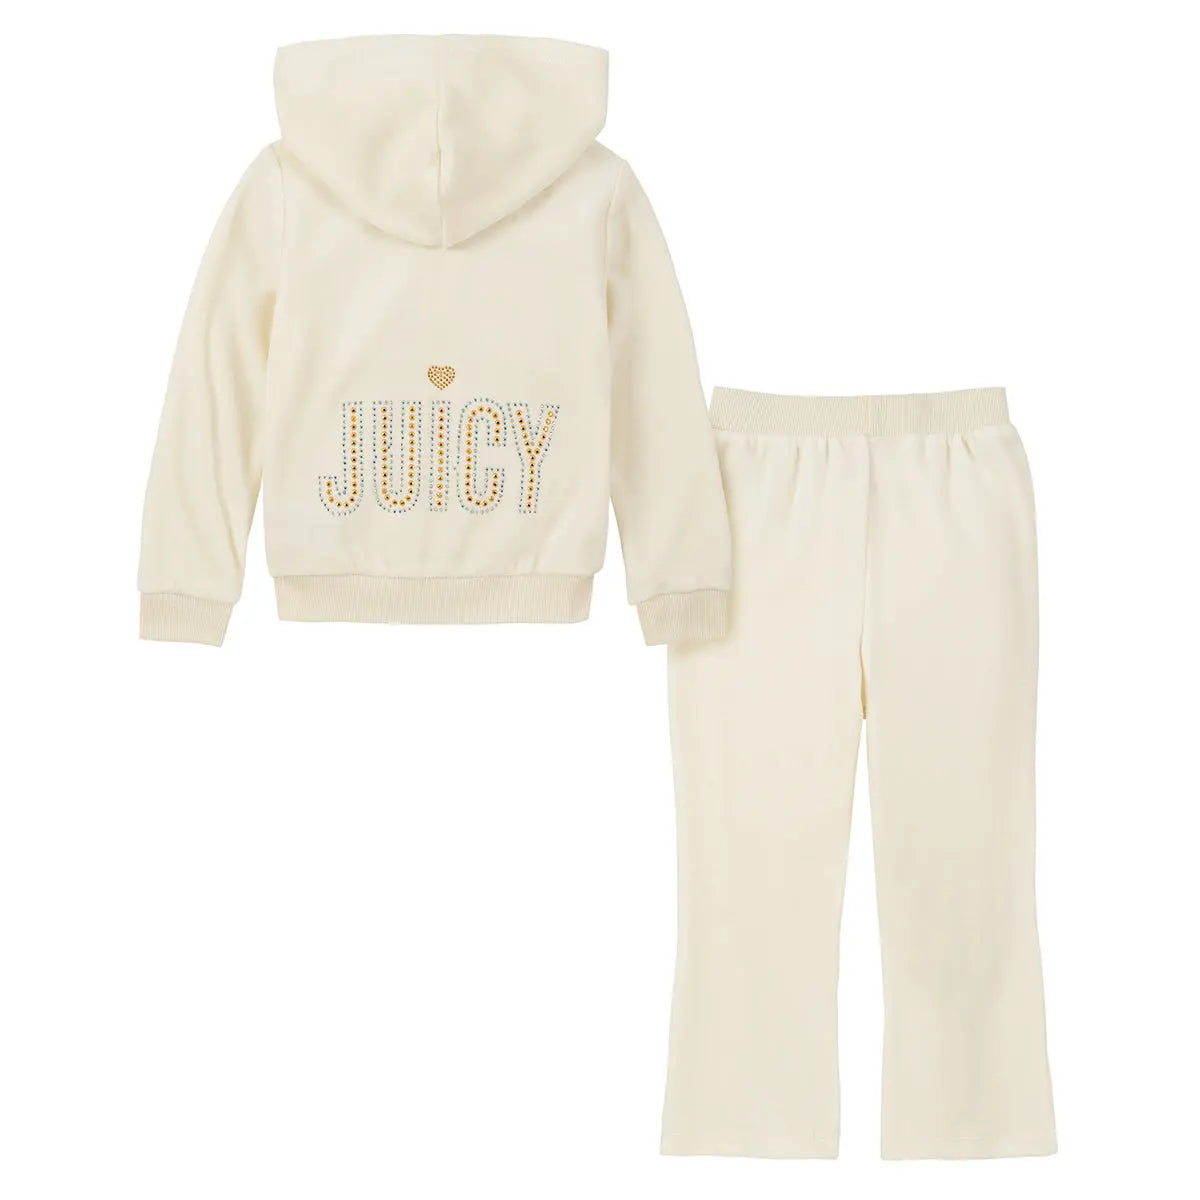 Juicy Couture Girls Velour Sweatsuit Set – PROOZY